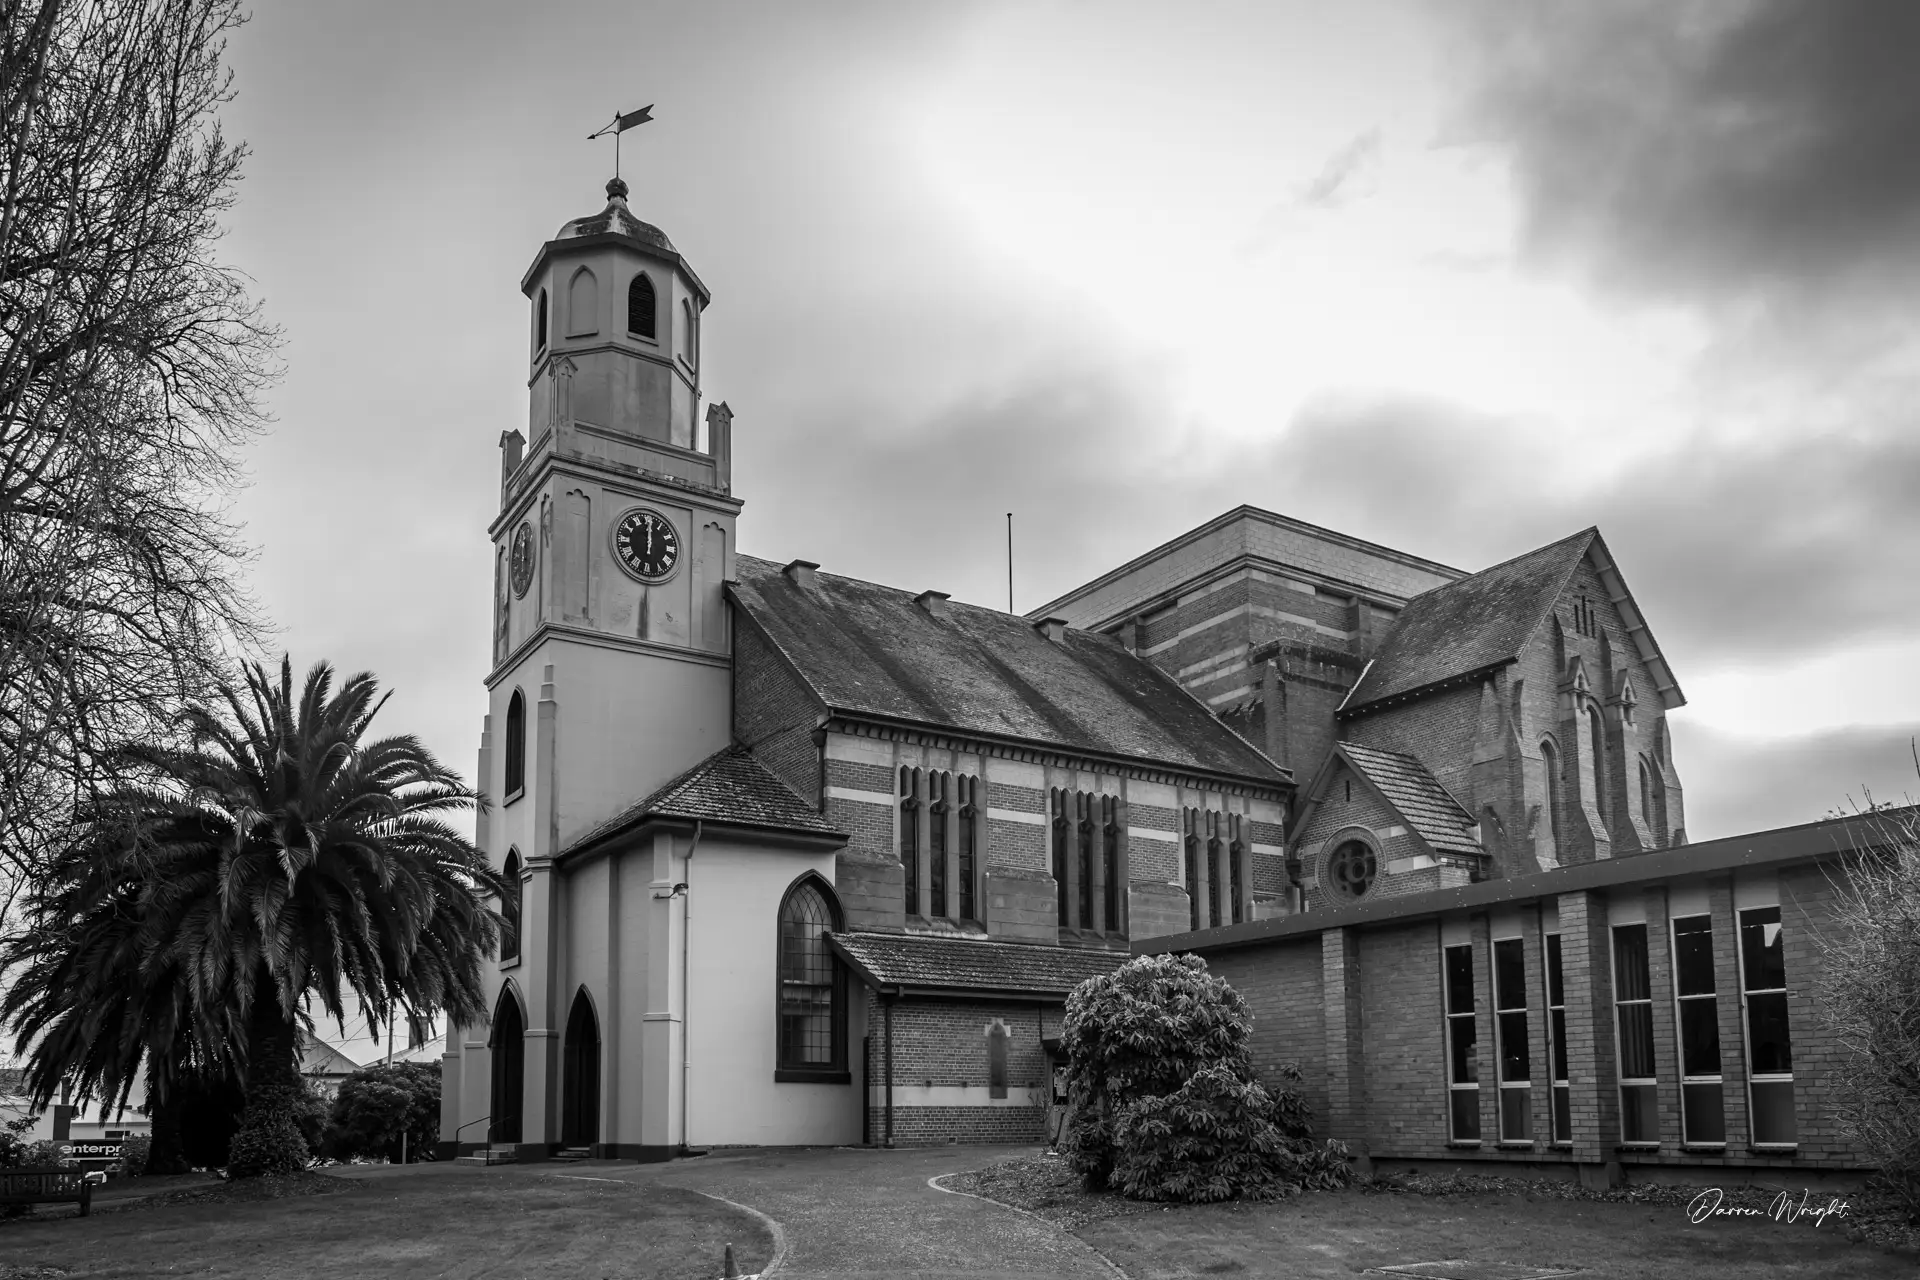 St Johns Anglican Church, Launceston. Image Credit: Darren Wright